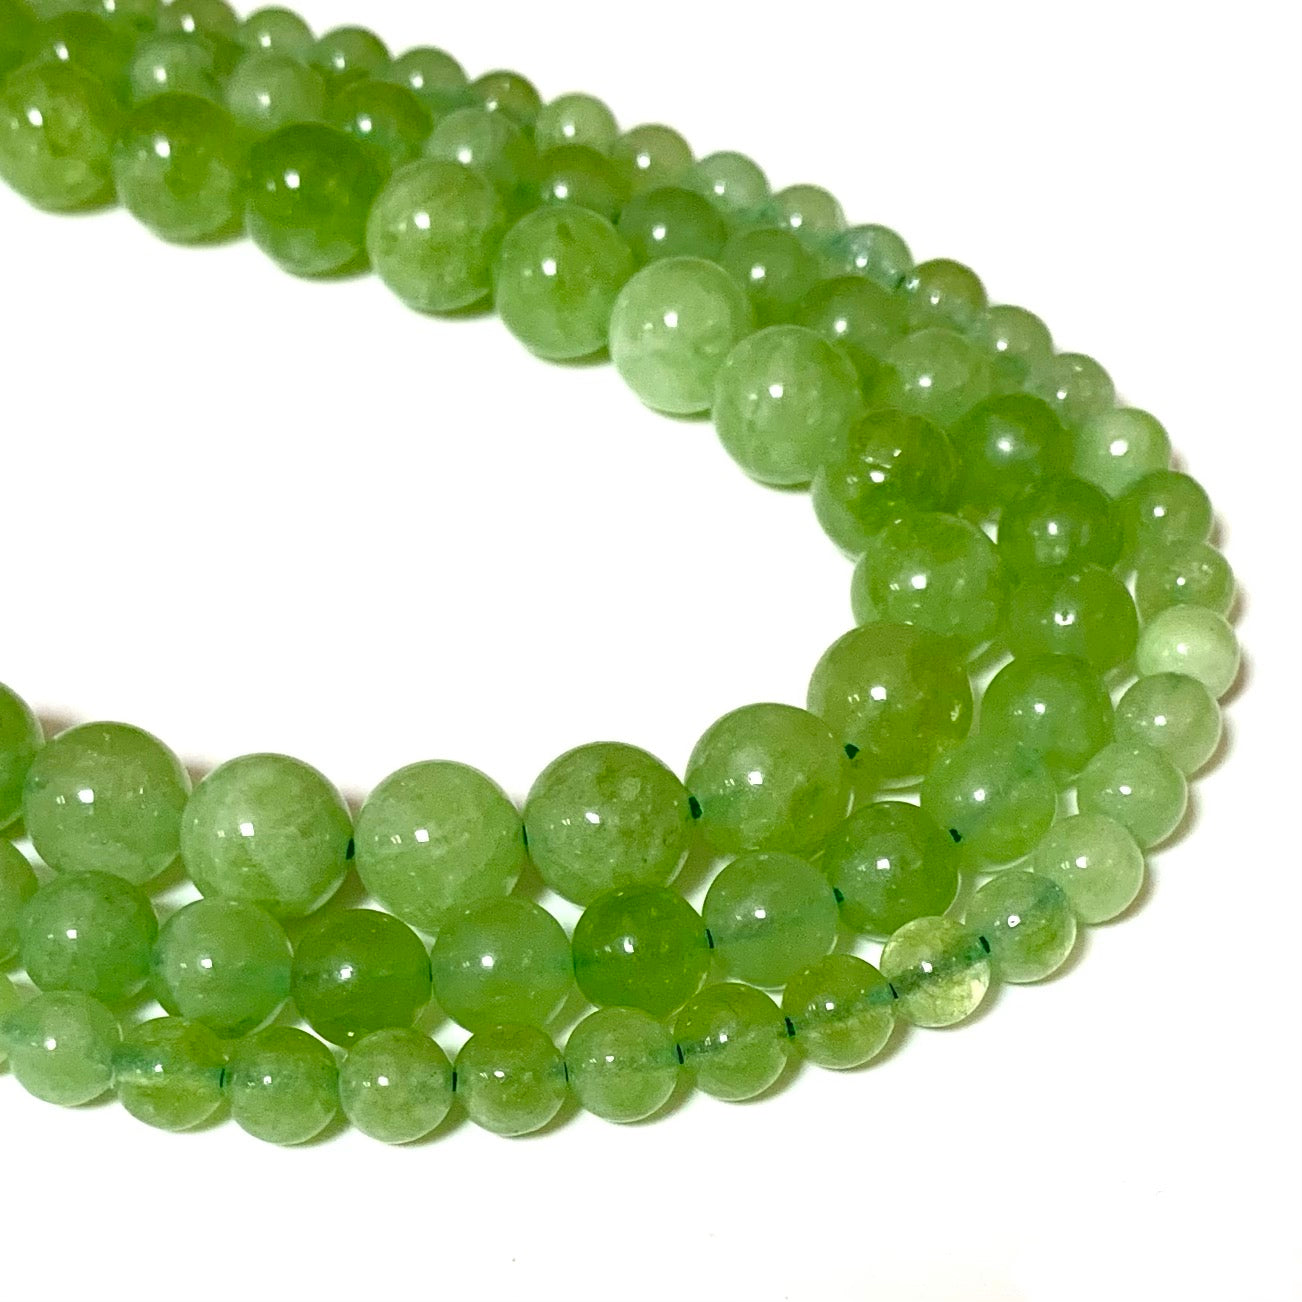 Green Peridot Natural Stone Beads - Size 6/8/10mm - One Full 15" Strand